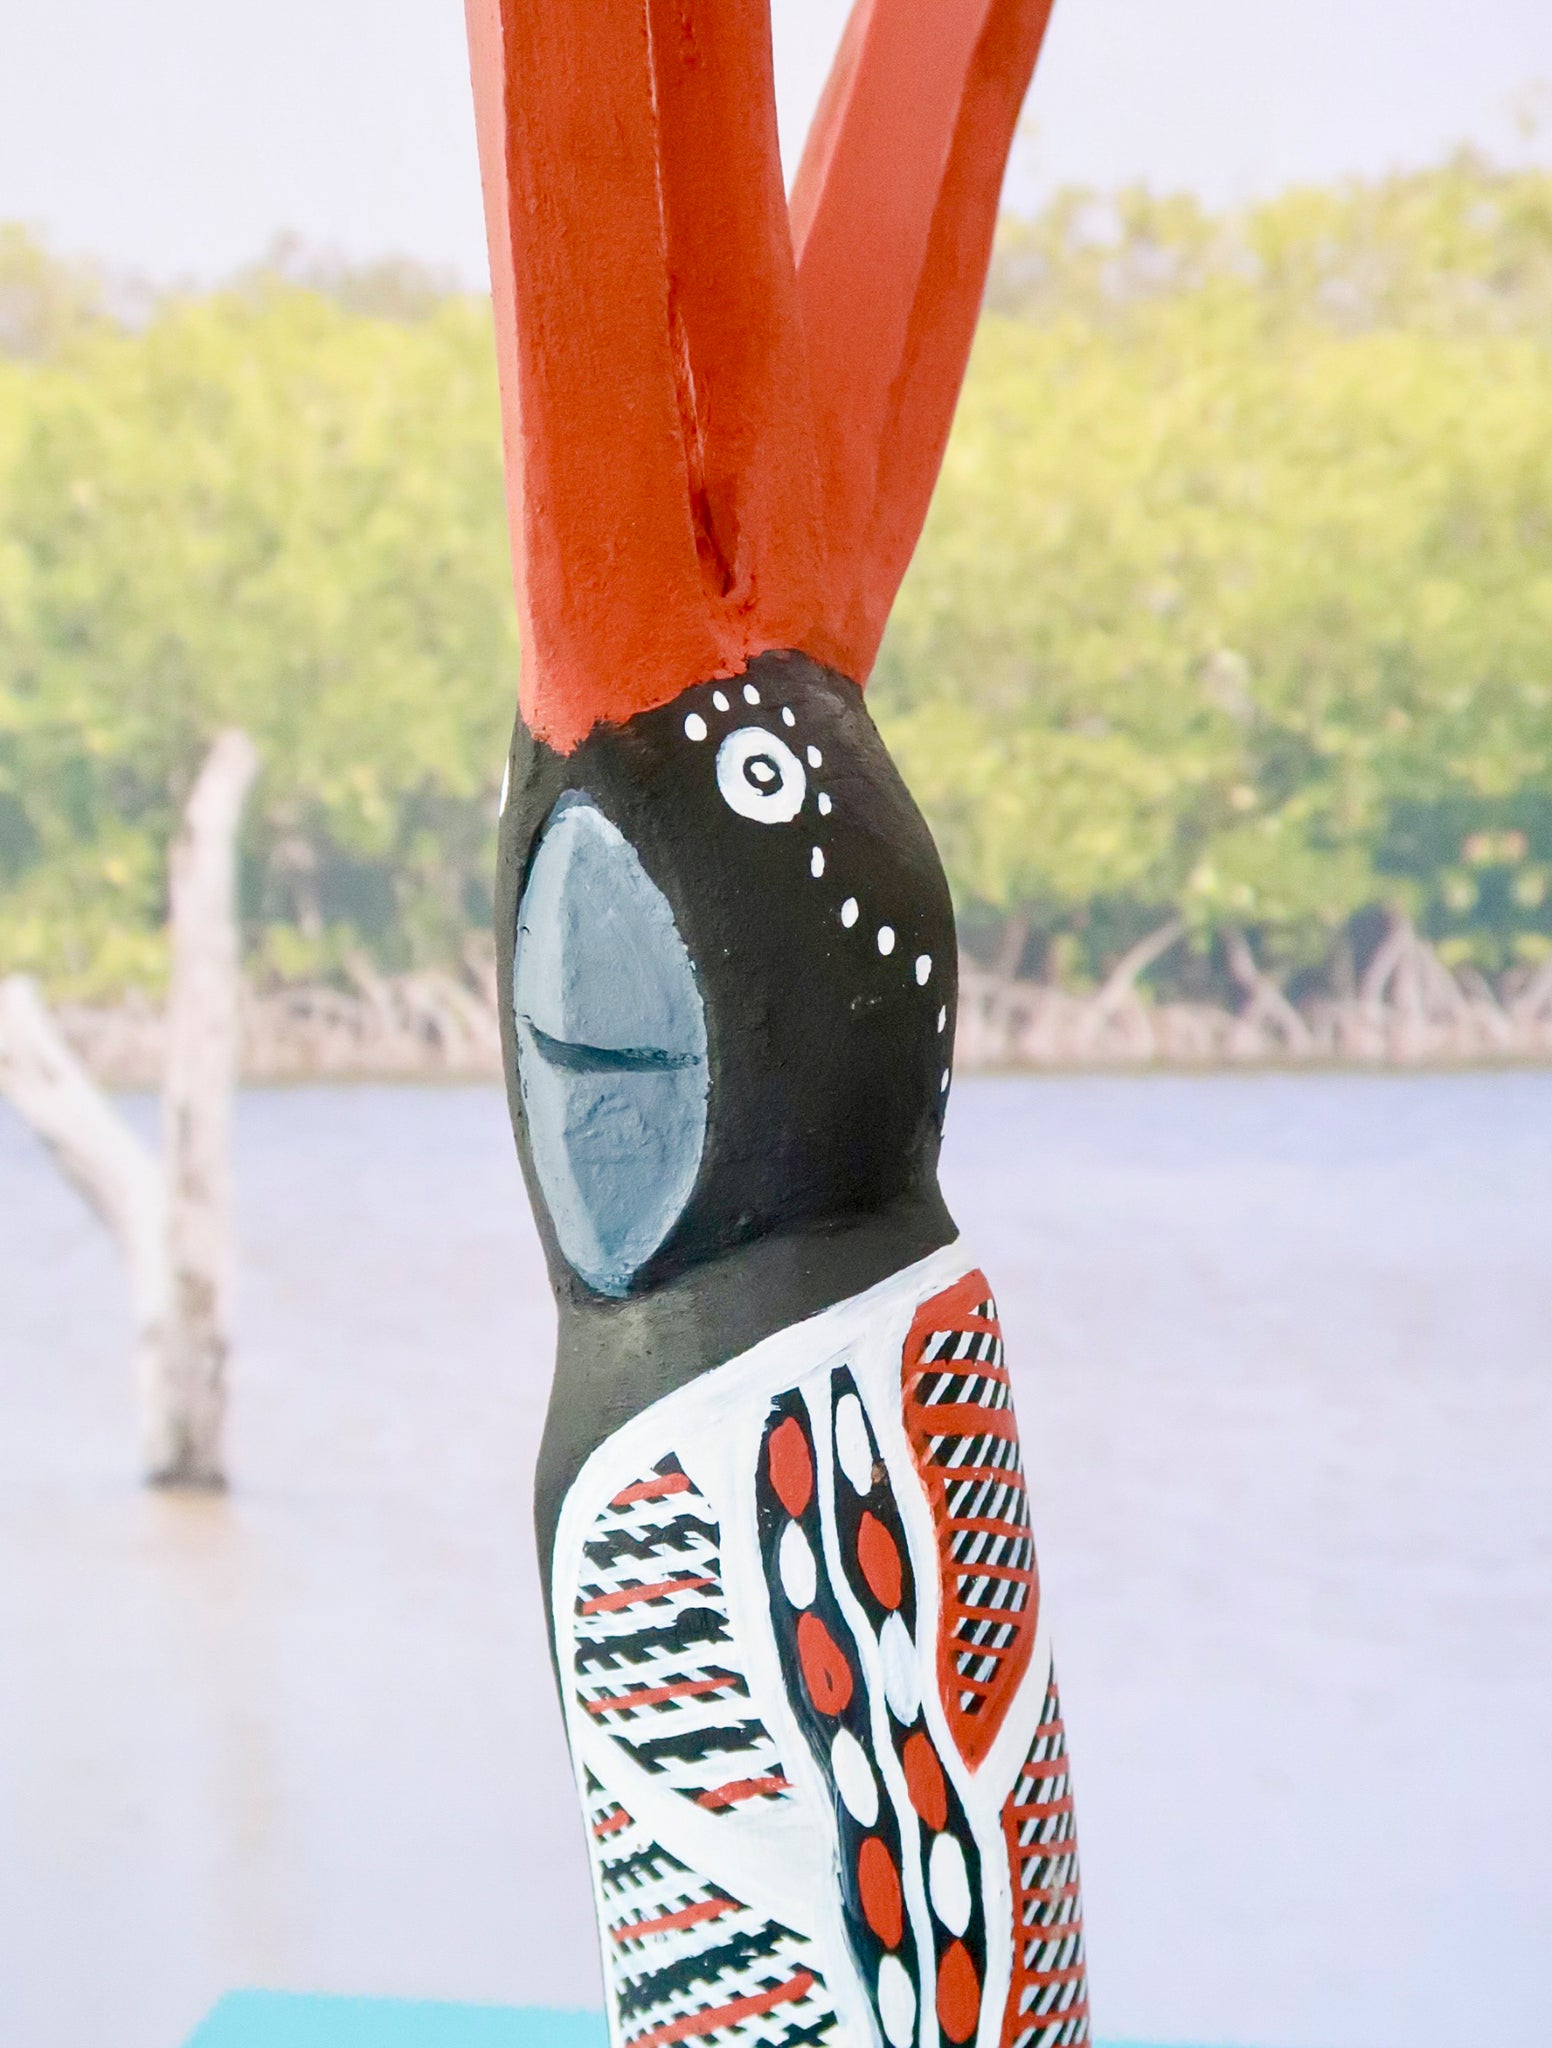 2. Karnamarr (Red Tailed Black Cockatoo)